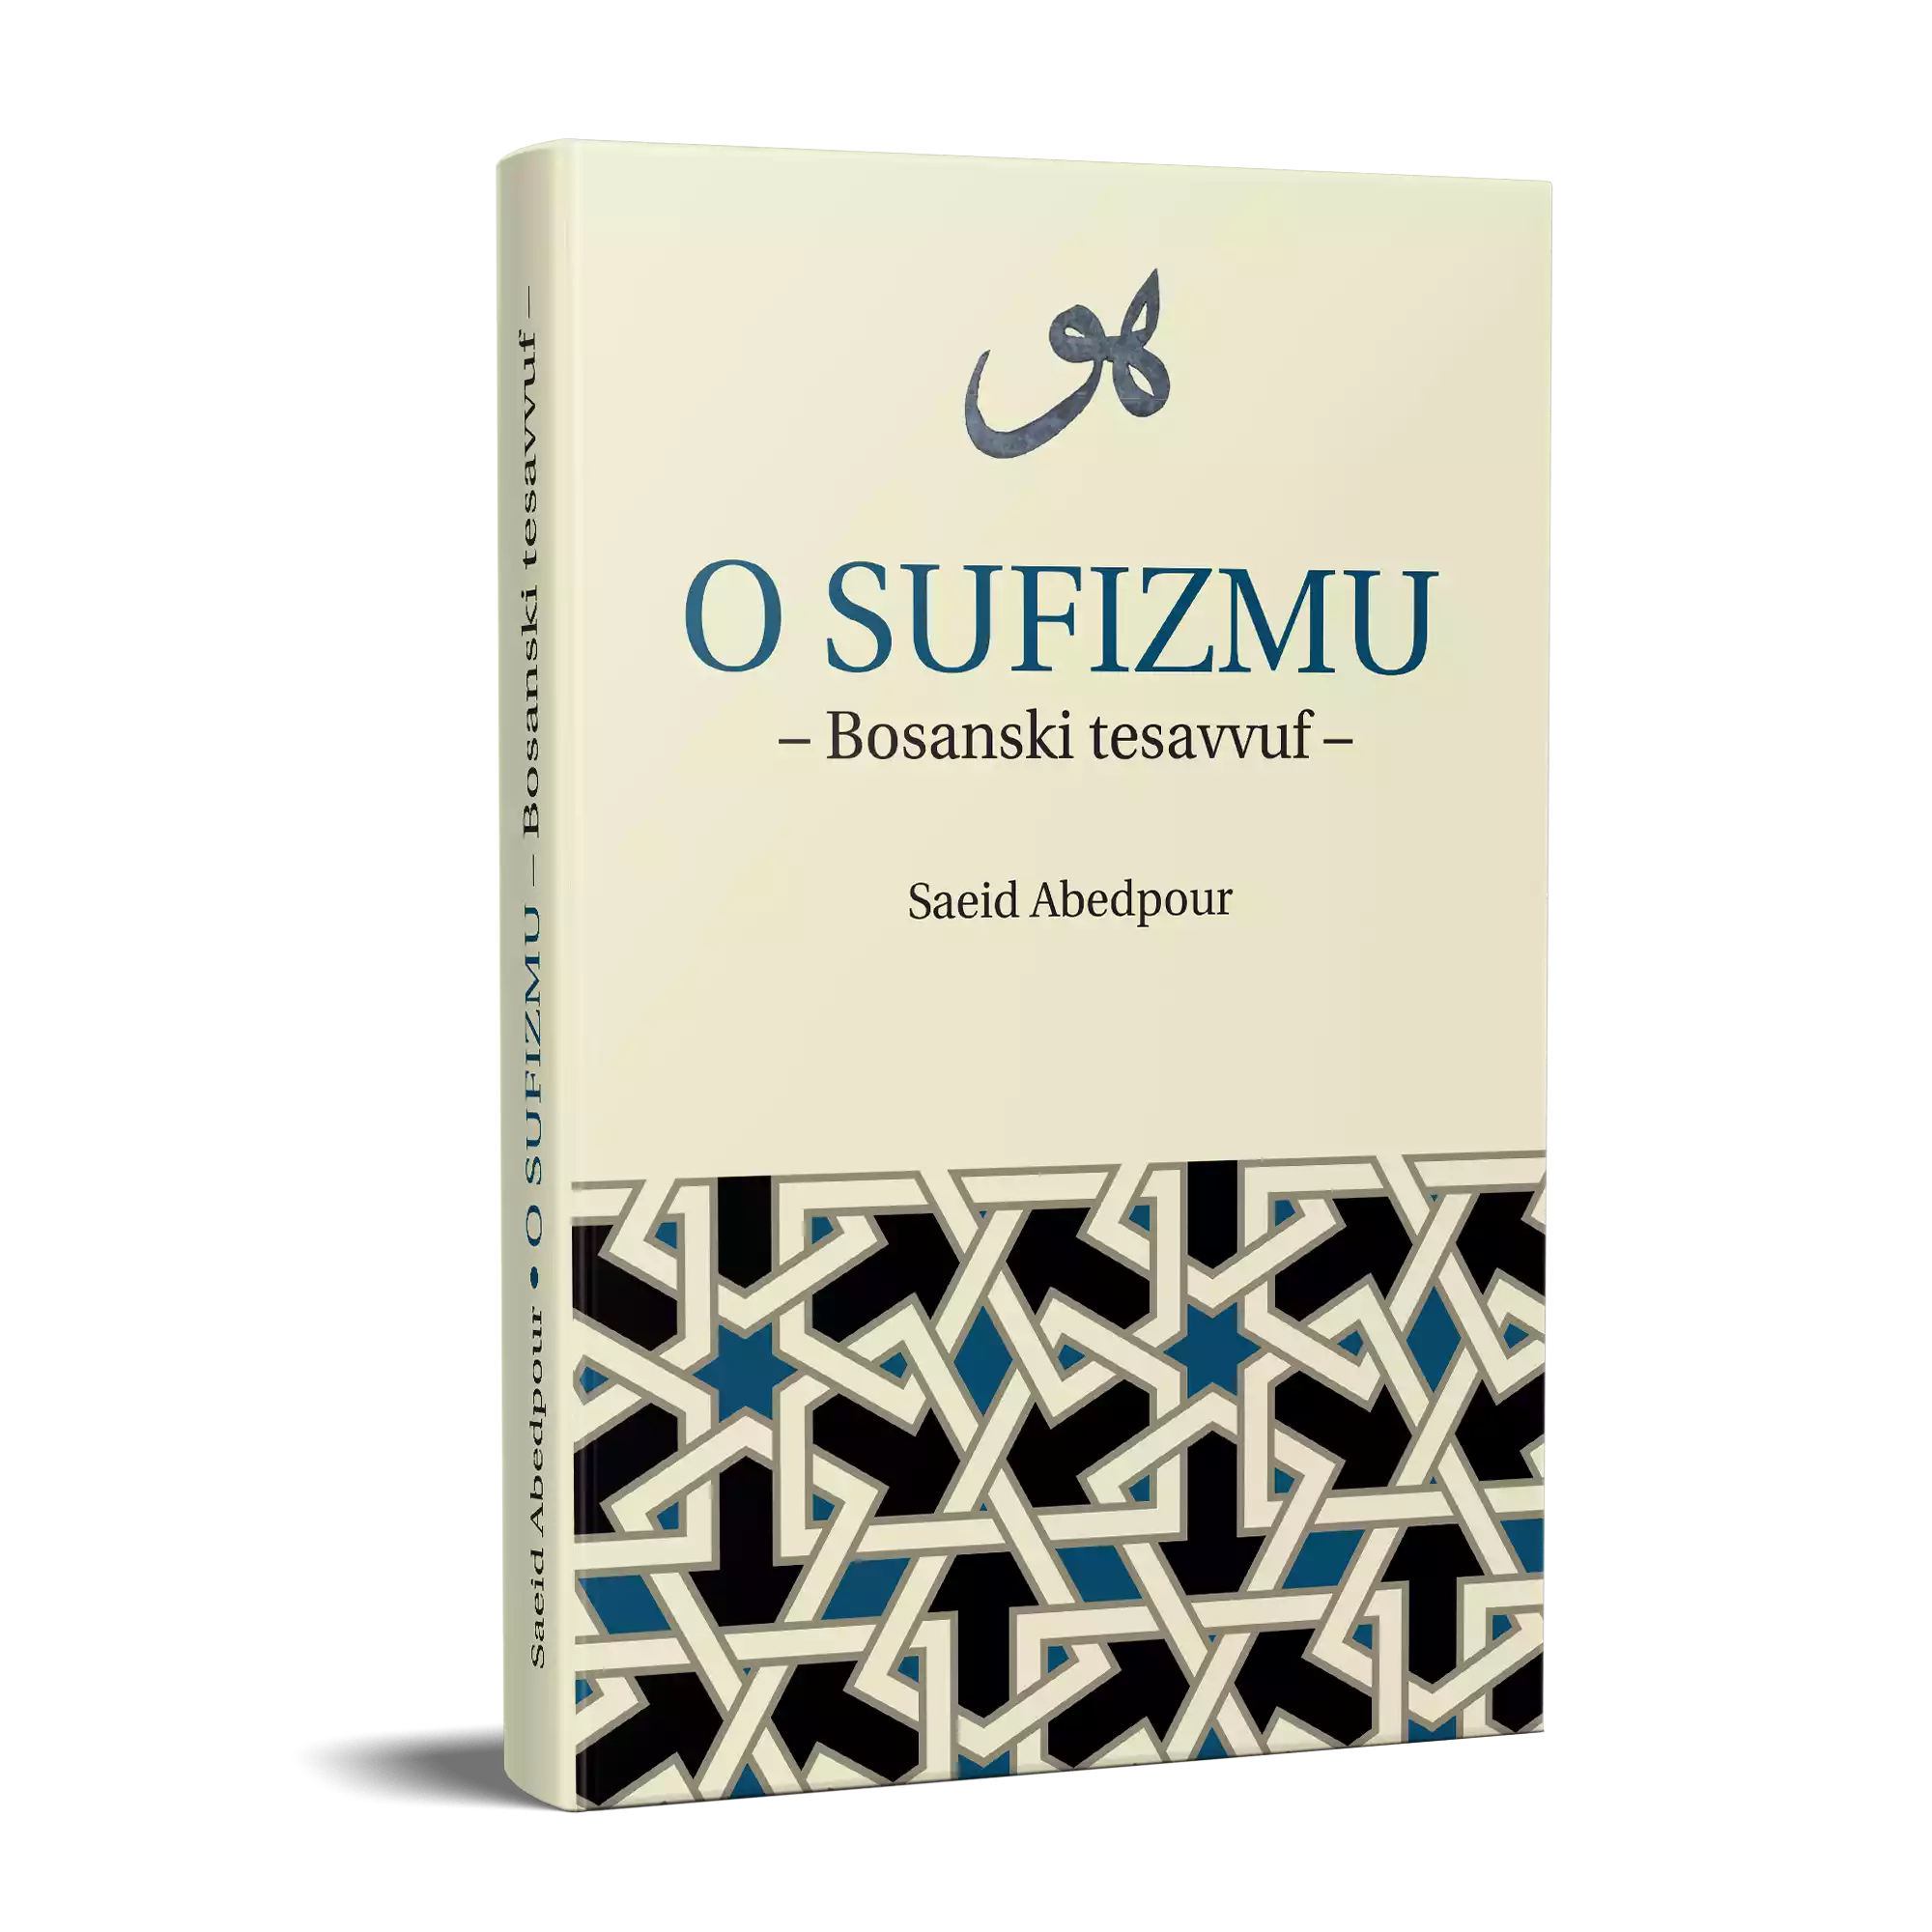 O sufizmu – Bosanski tesavvuf